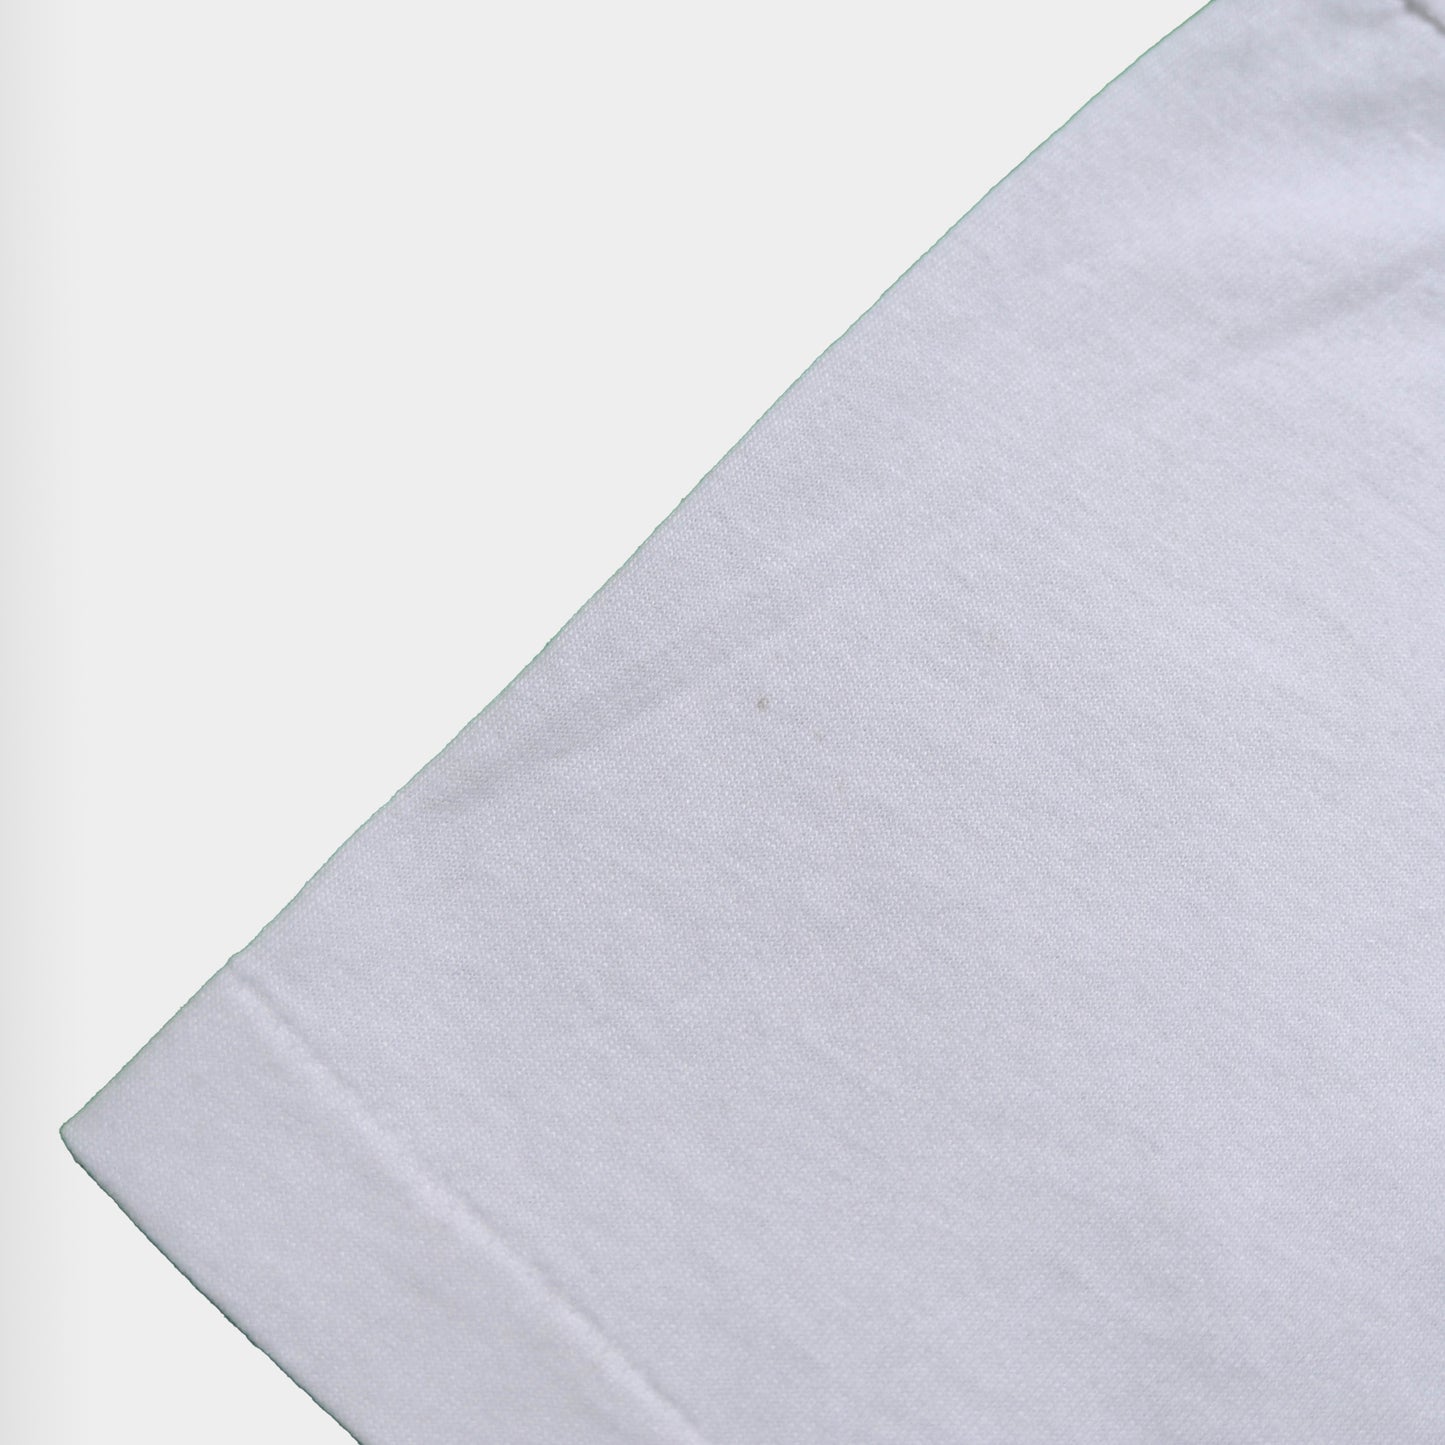 90's Buttwiser  パロディーTシャツ　(XL)/A2712T